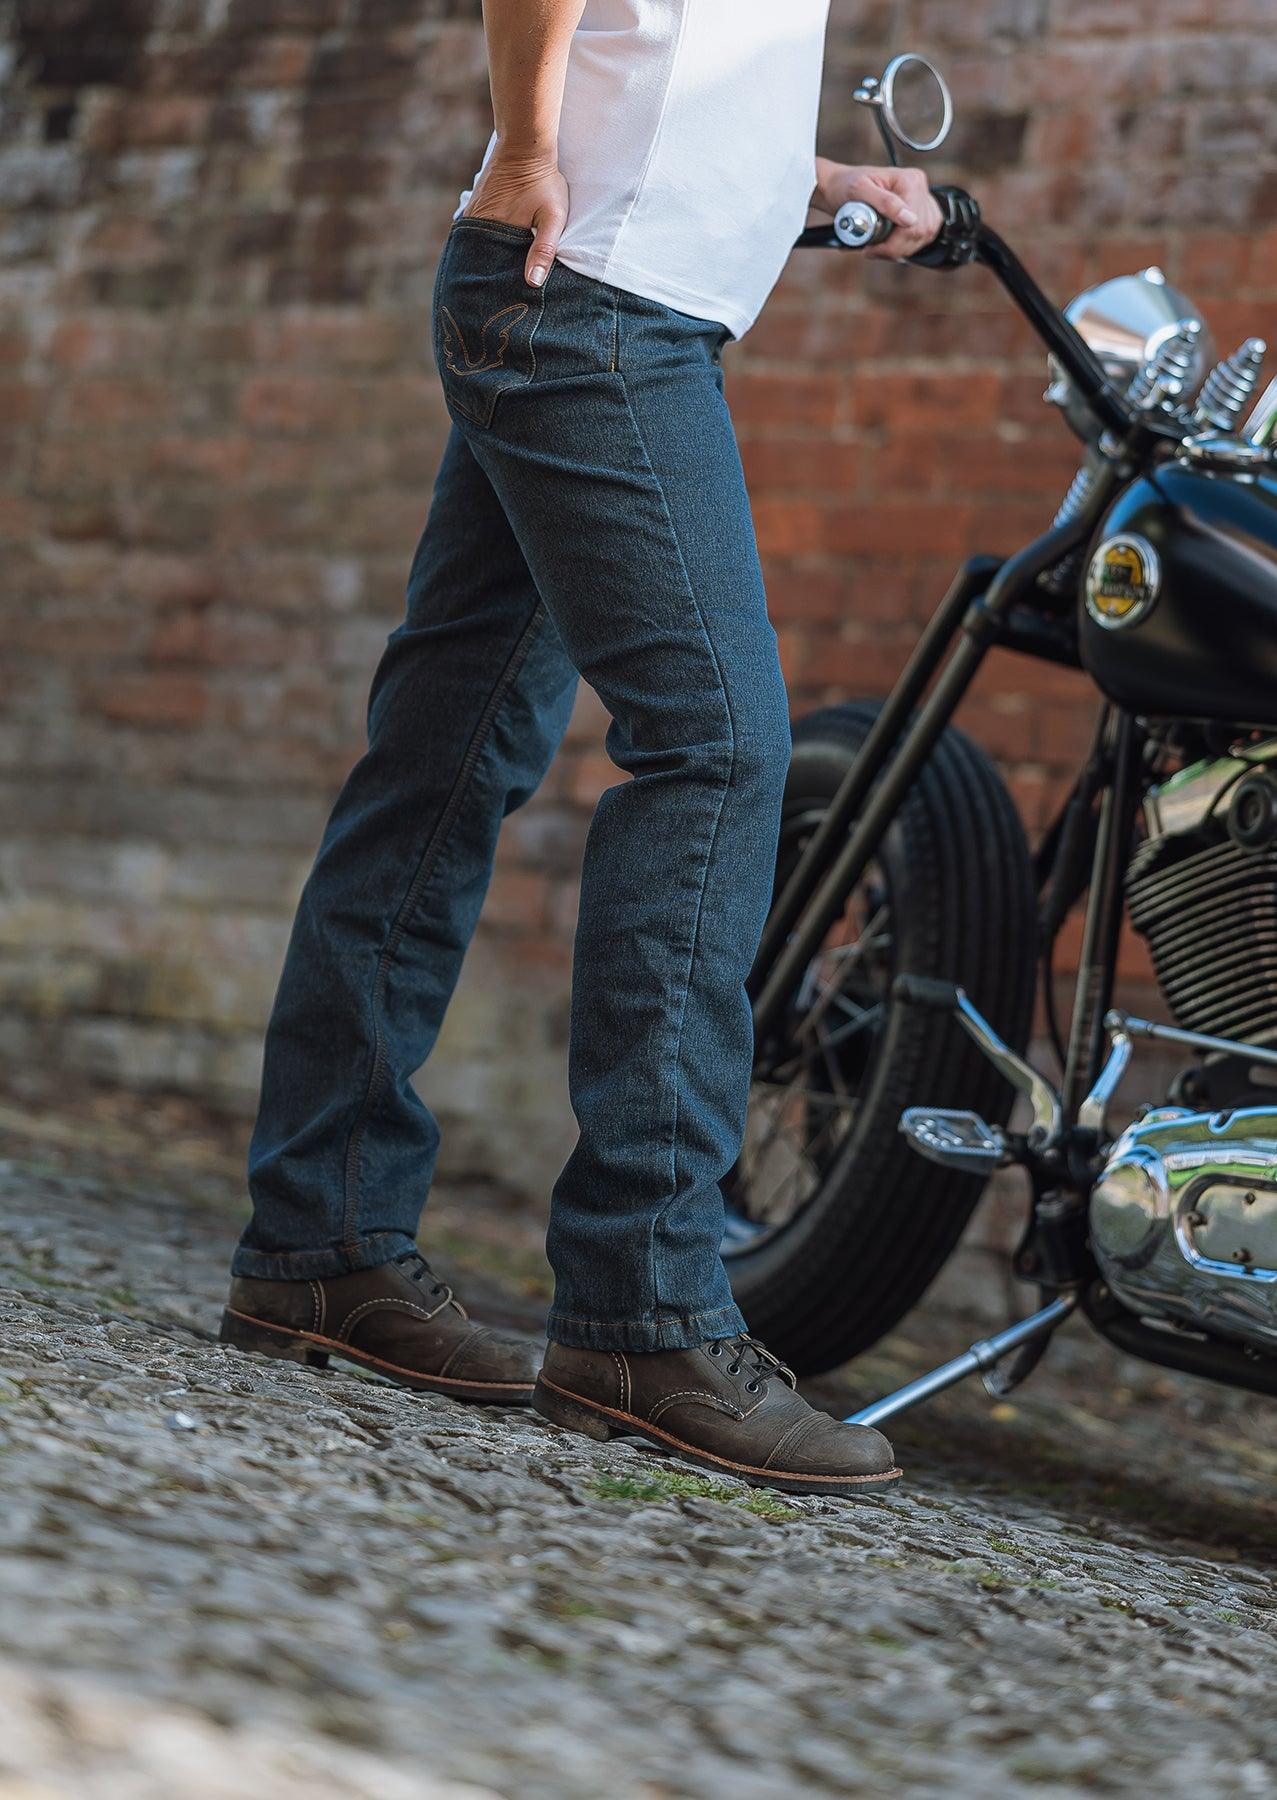 Ladies Taranis Elite AAA-rated single-layer motorcycle jeans in Indigo